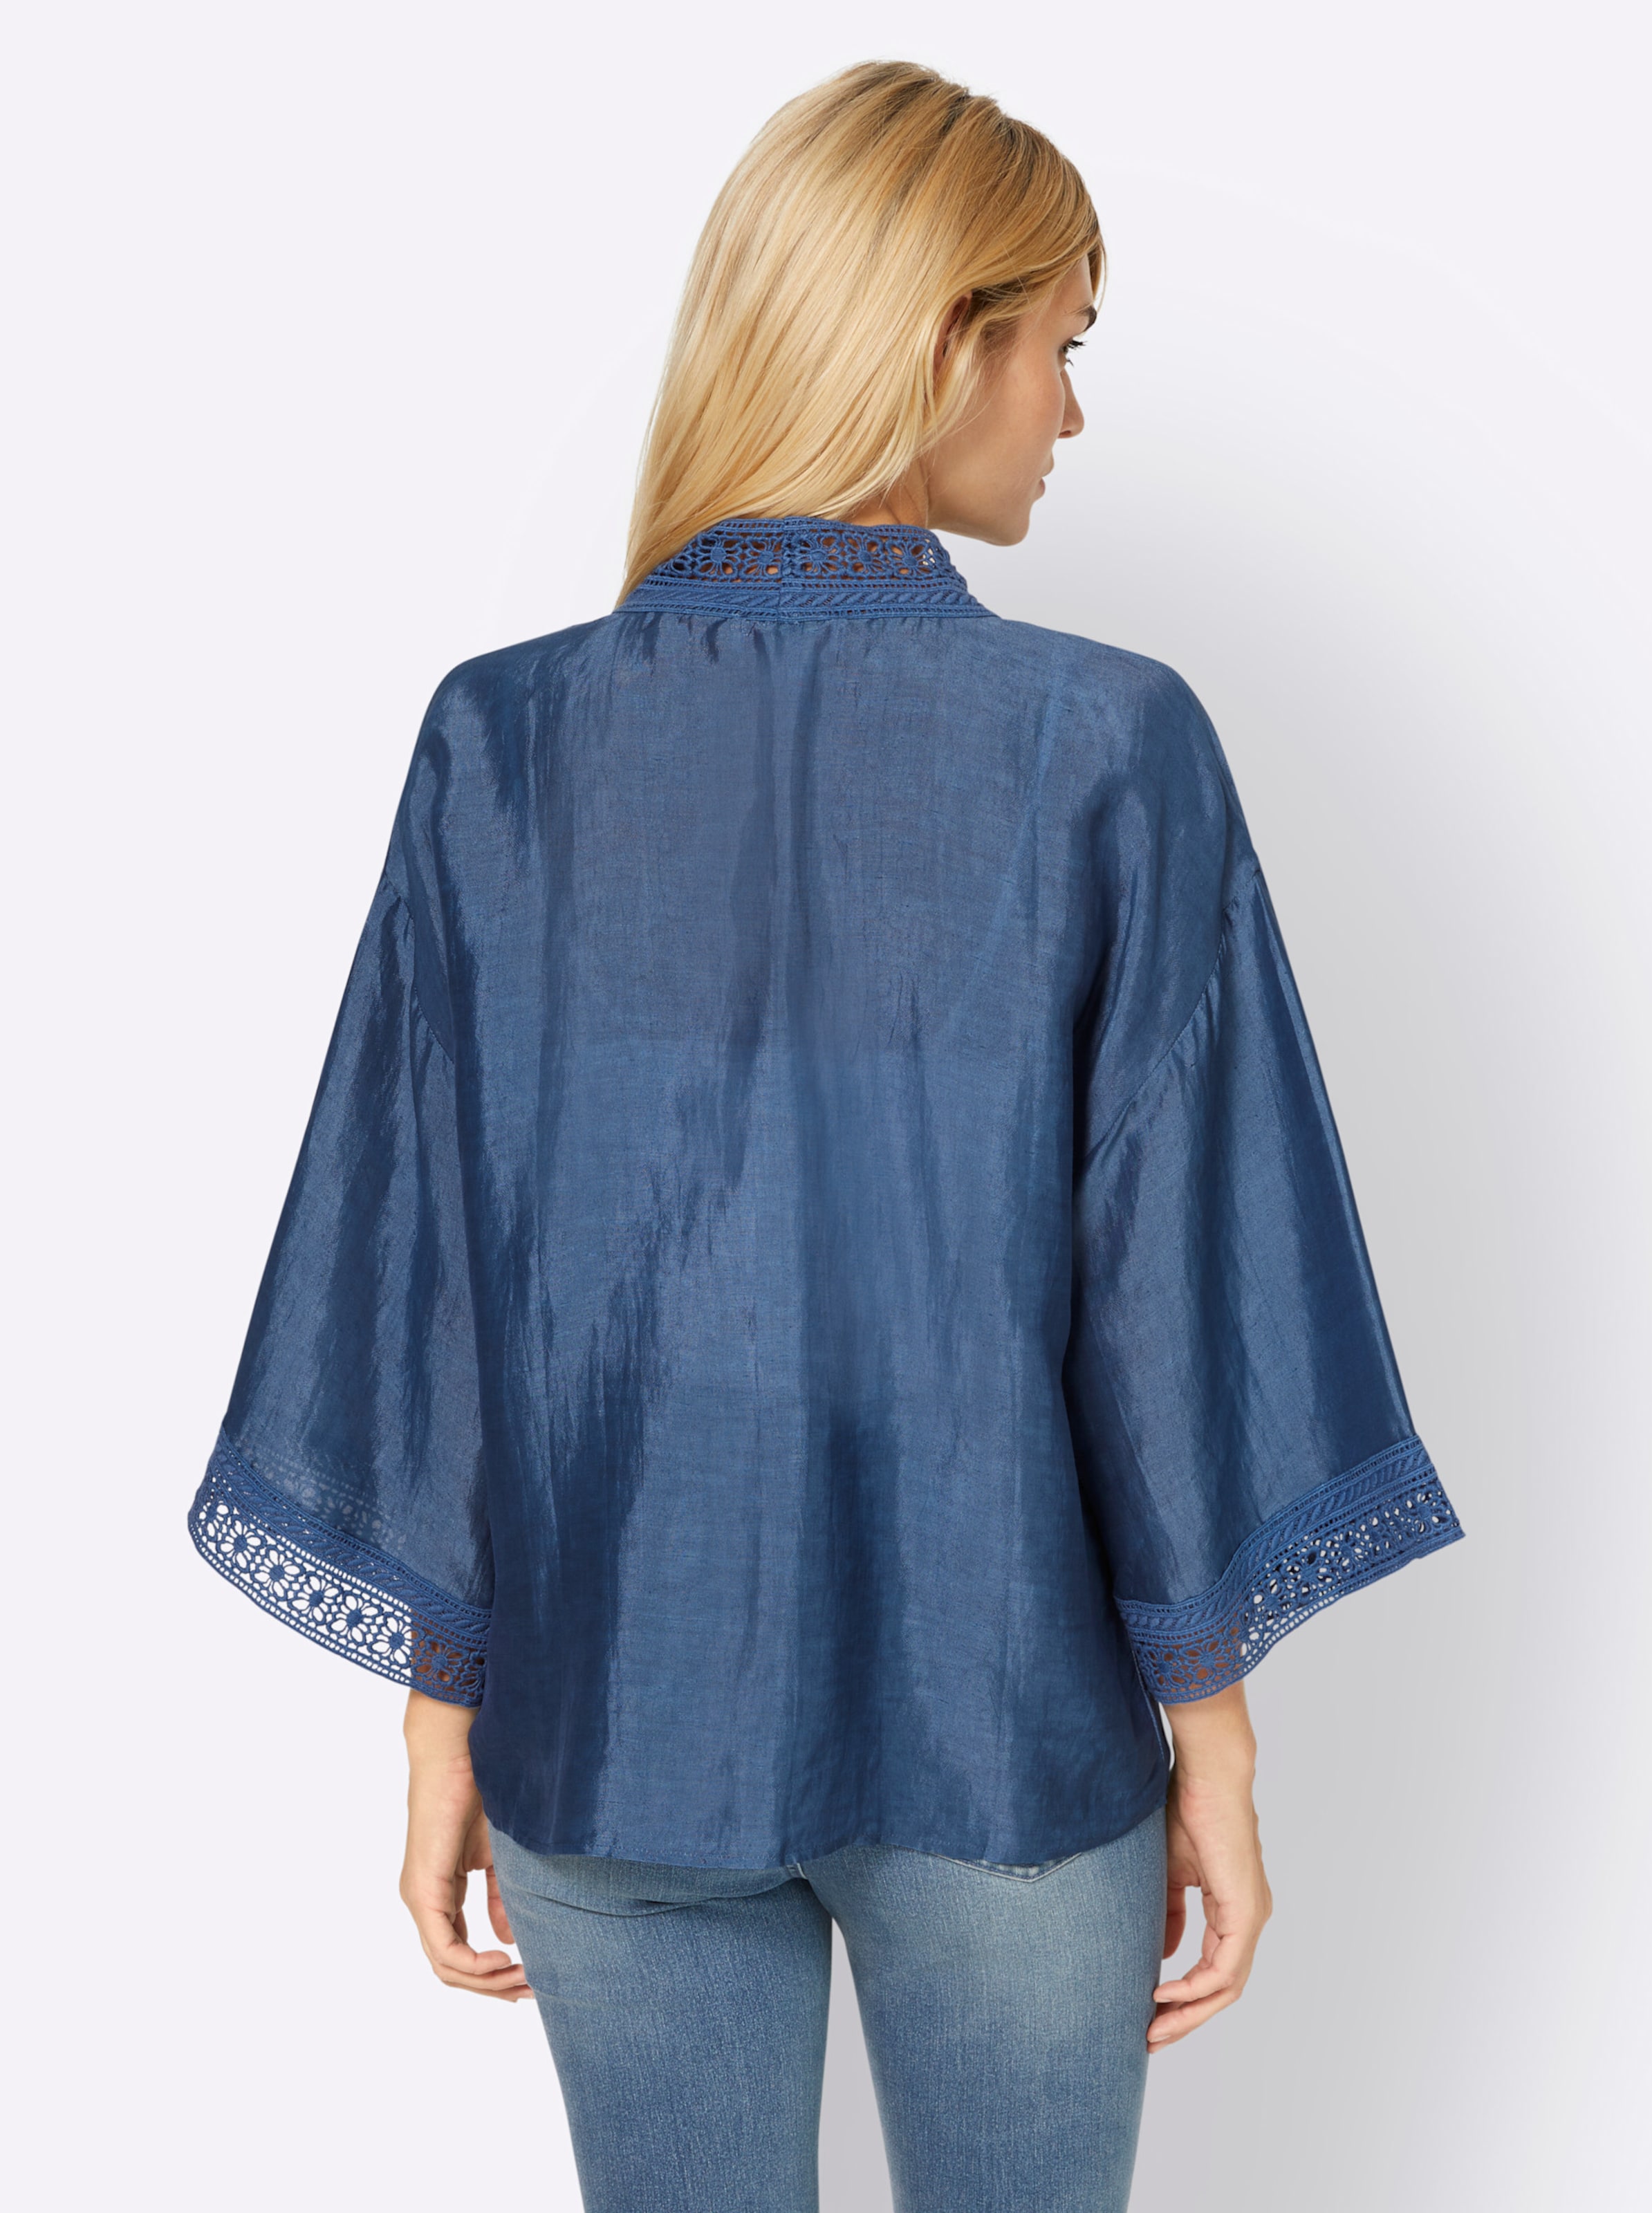 Lange blouse injeansblauw van heine